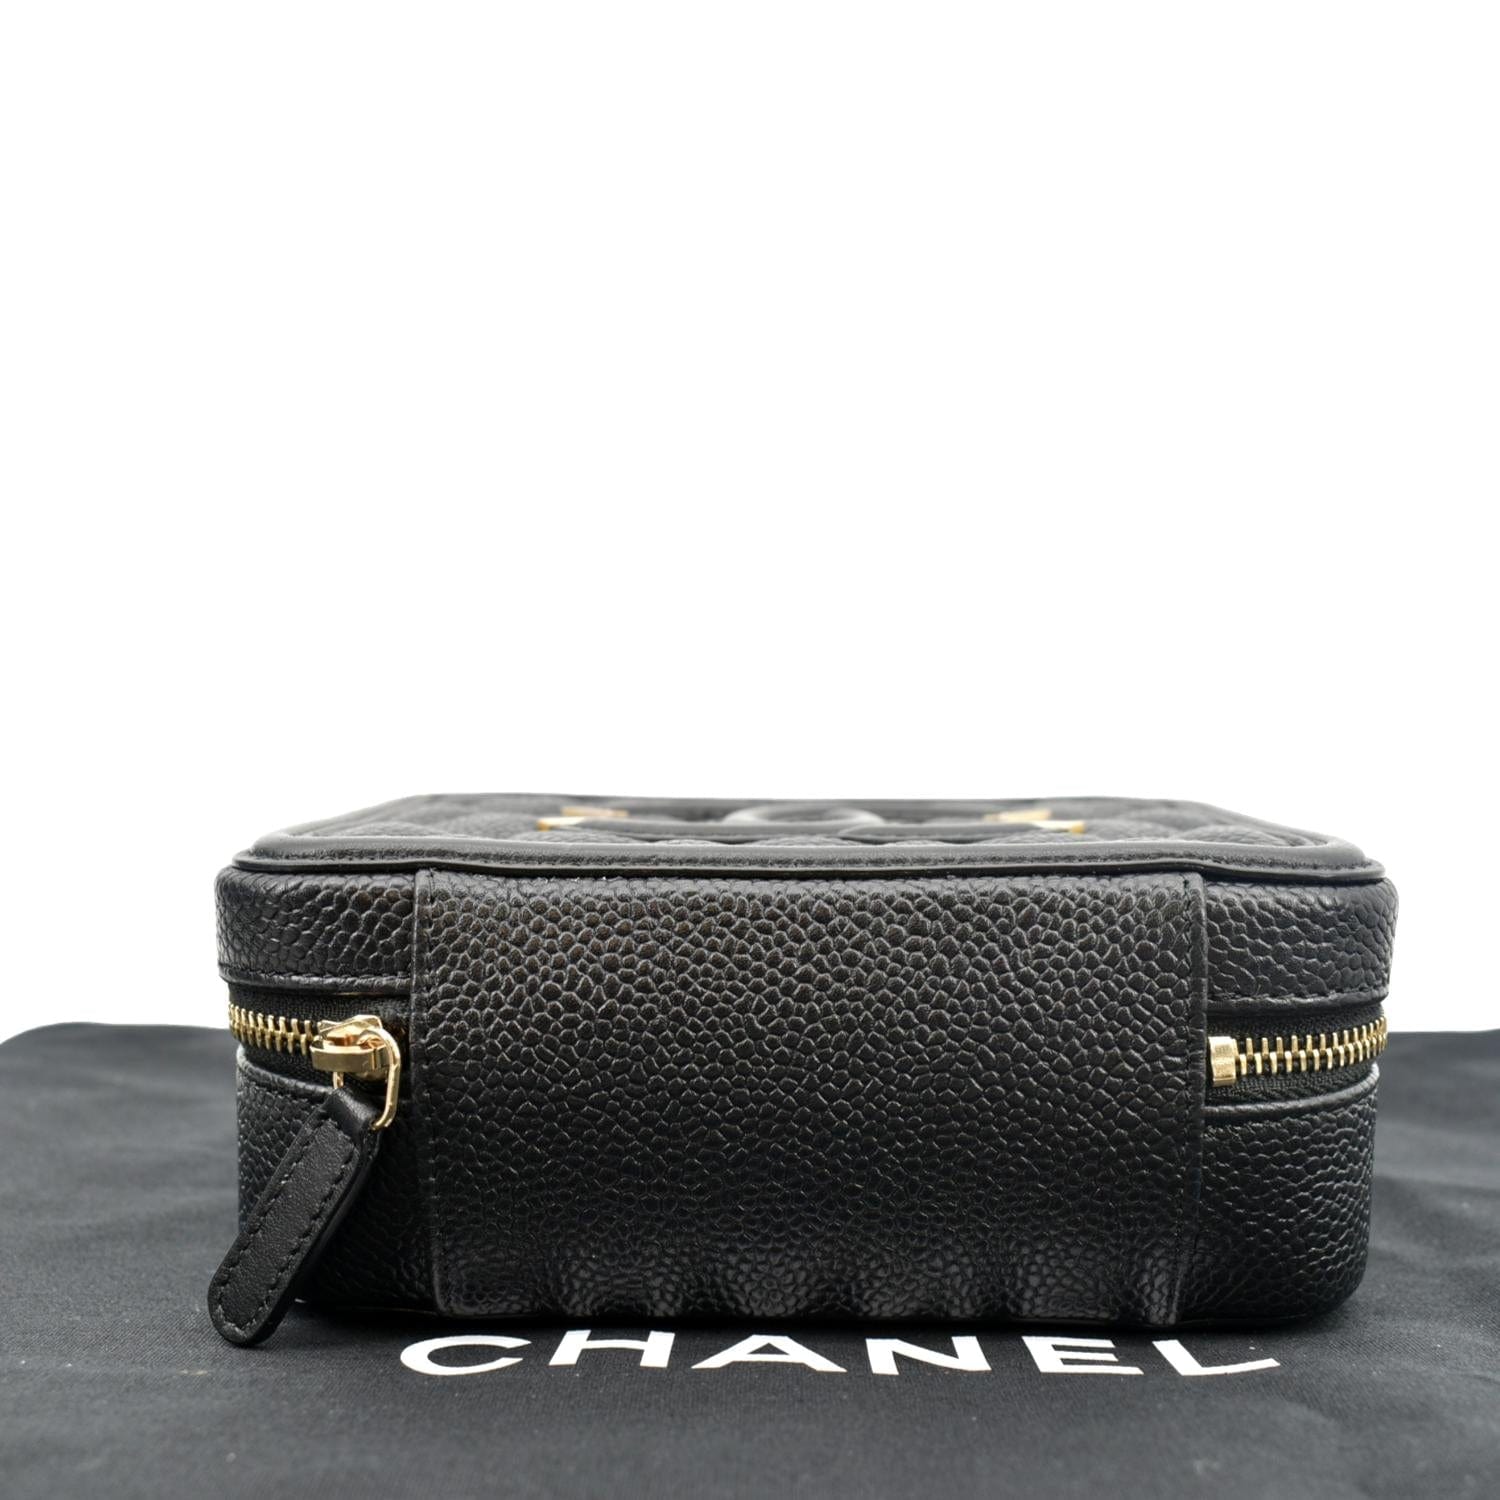 Chanel Caviar CC Vanity Case - Black Cosmetic Bags, Accessories